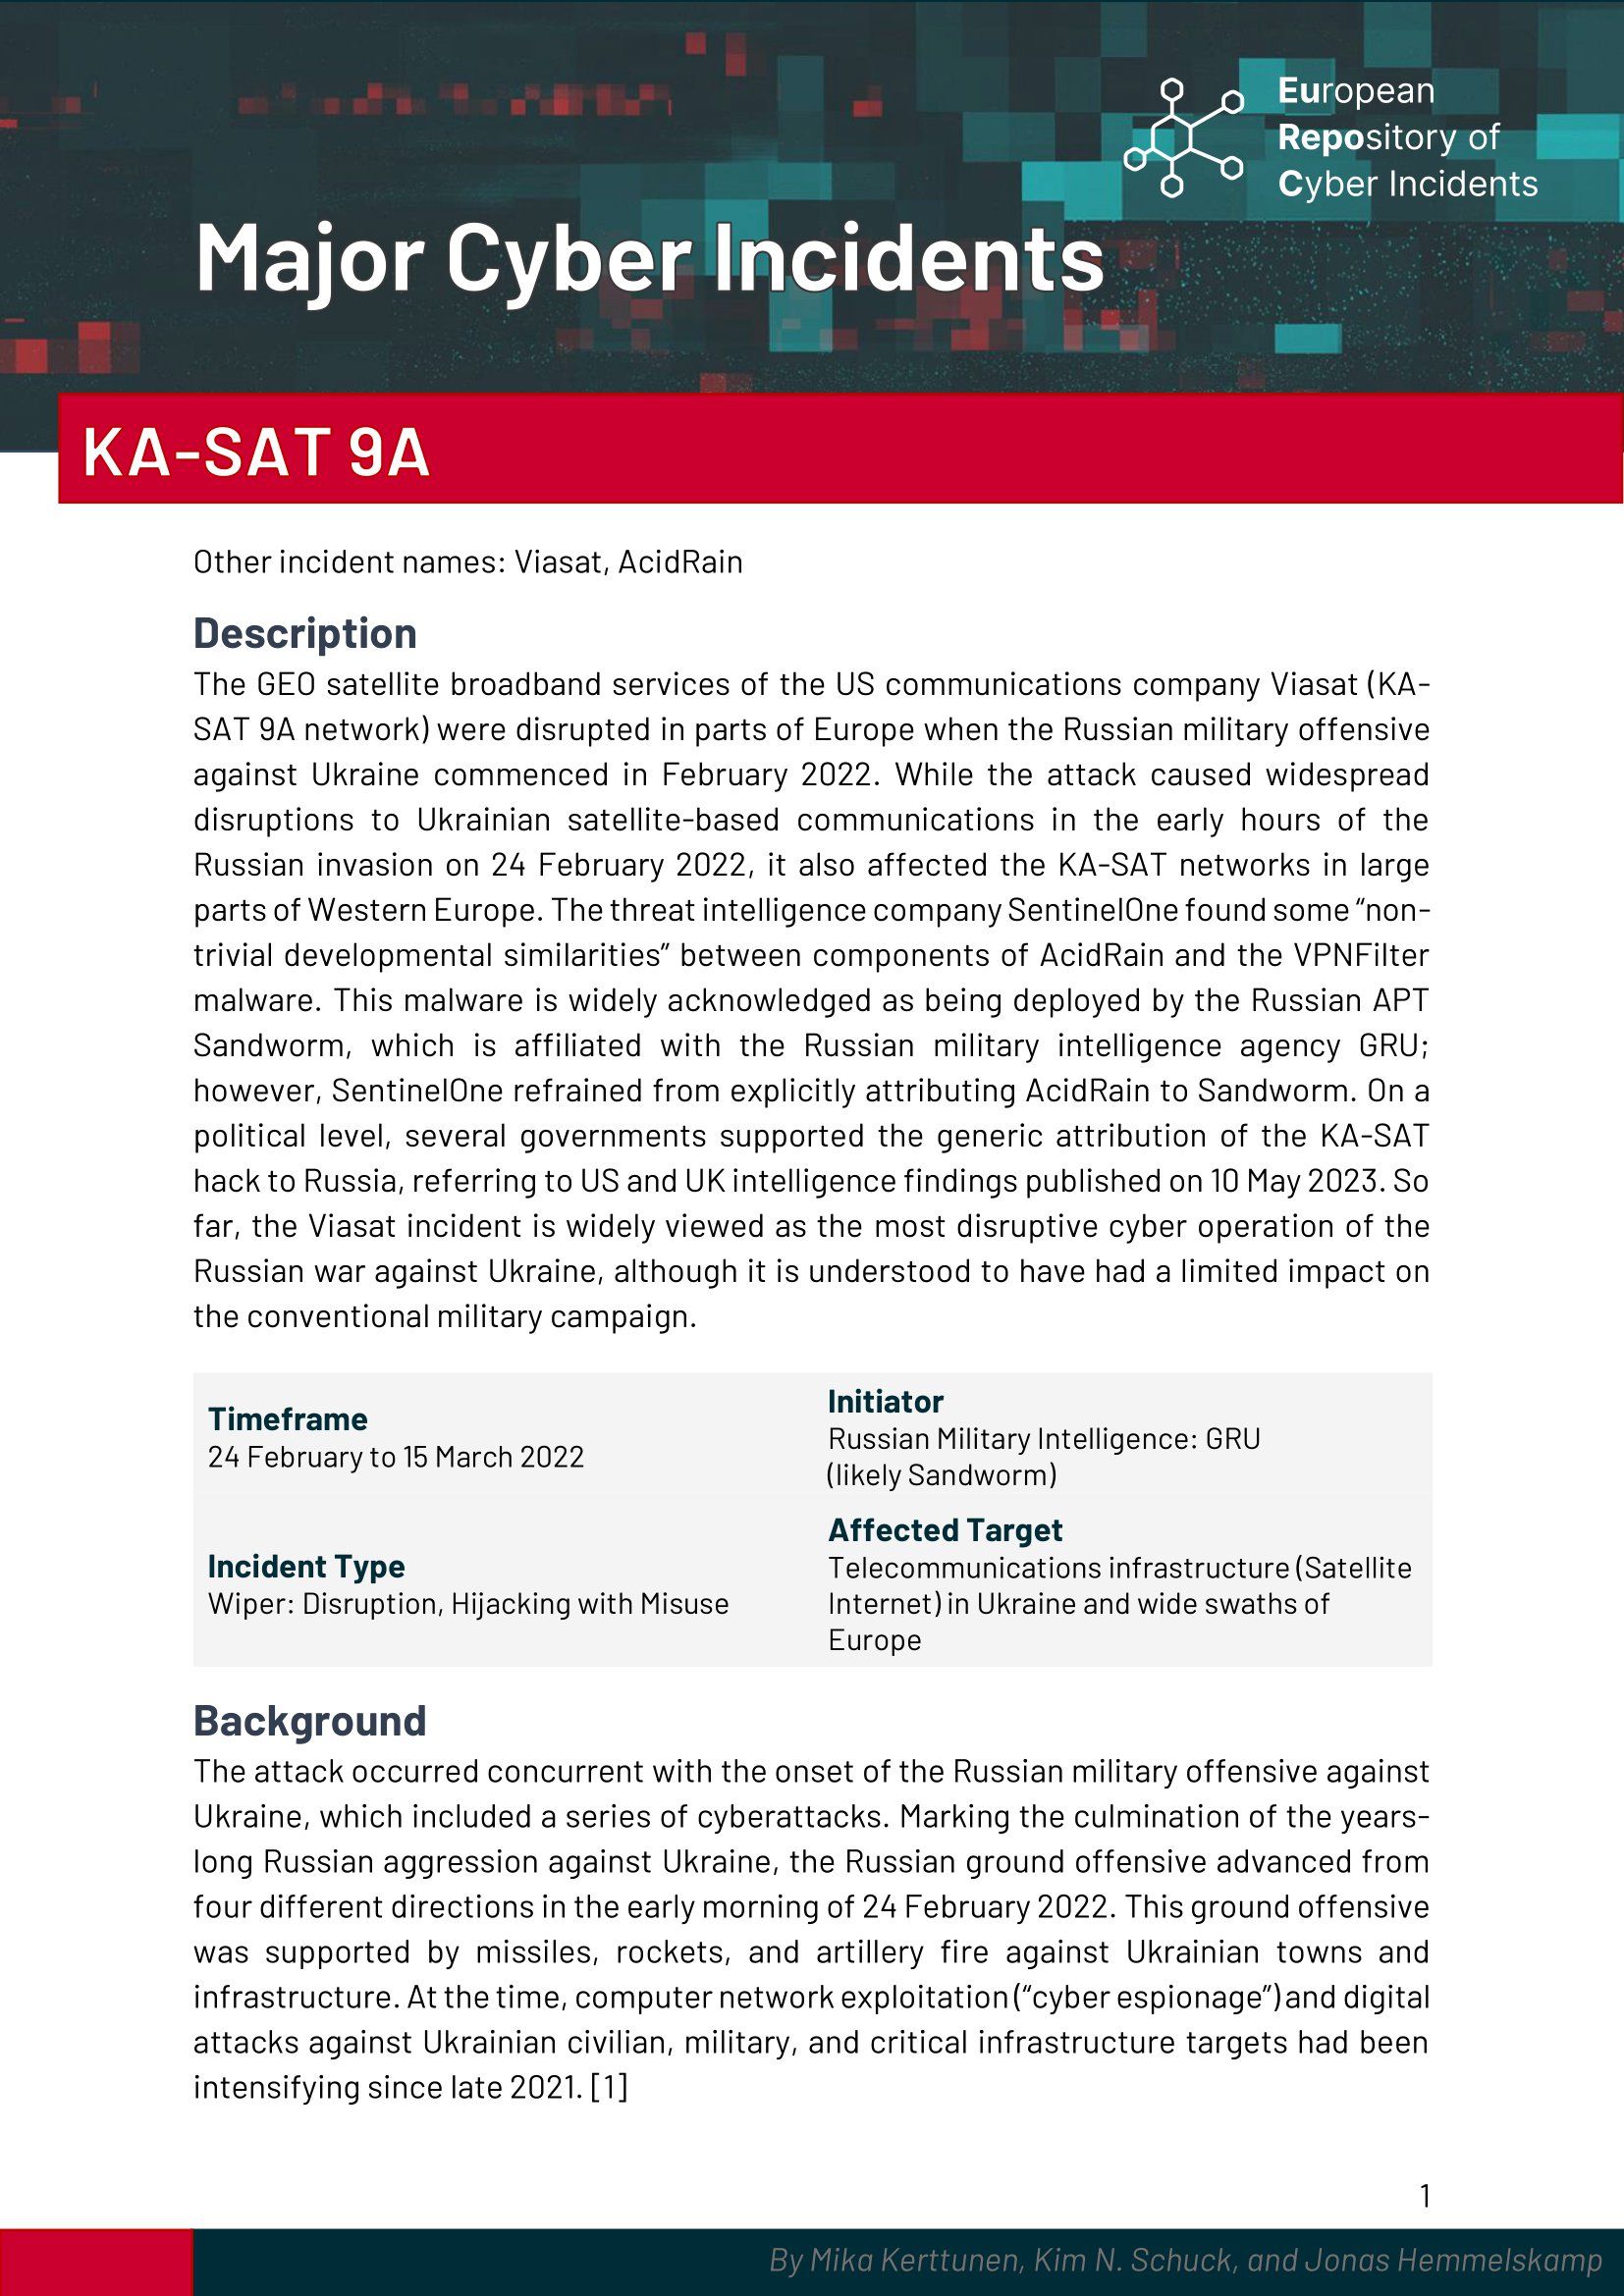 Major Cyber Incident: KA-SAT 9A